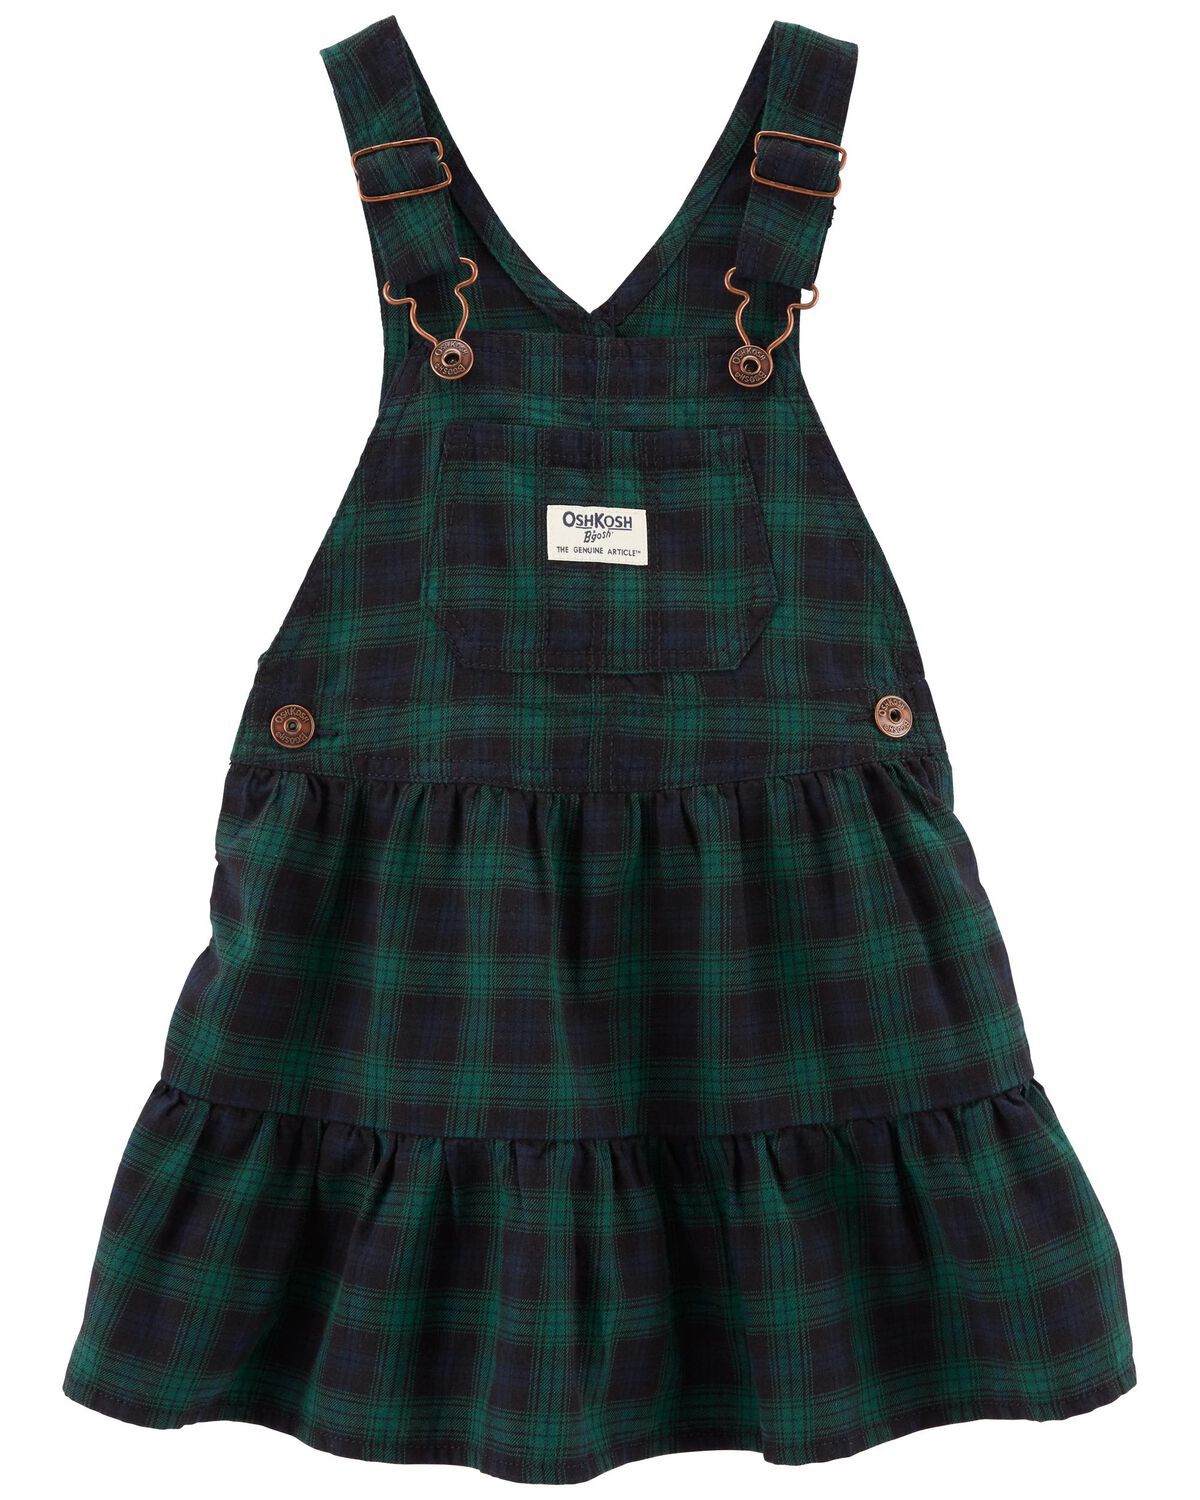 Green Plaid Toddler Plaid Jumper Dress | oshkosh.com | OshKosh B'gosh